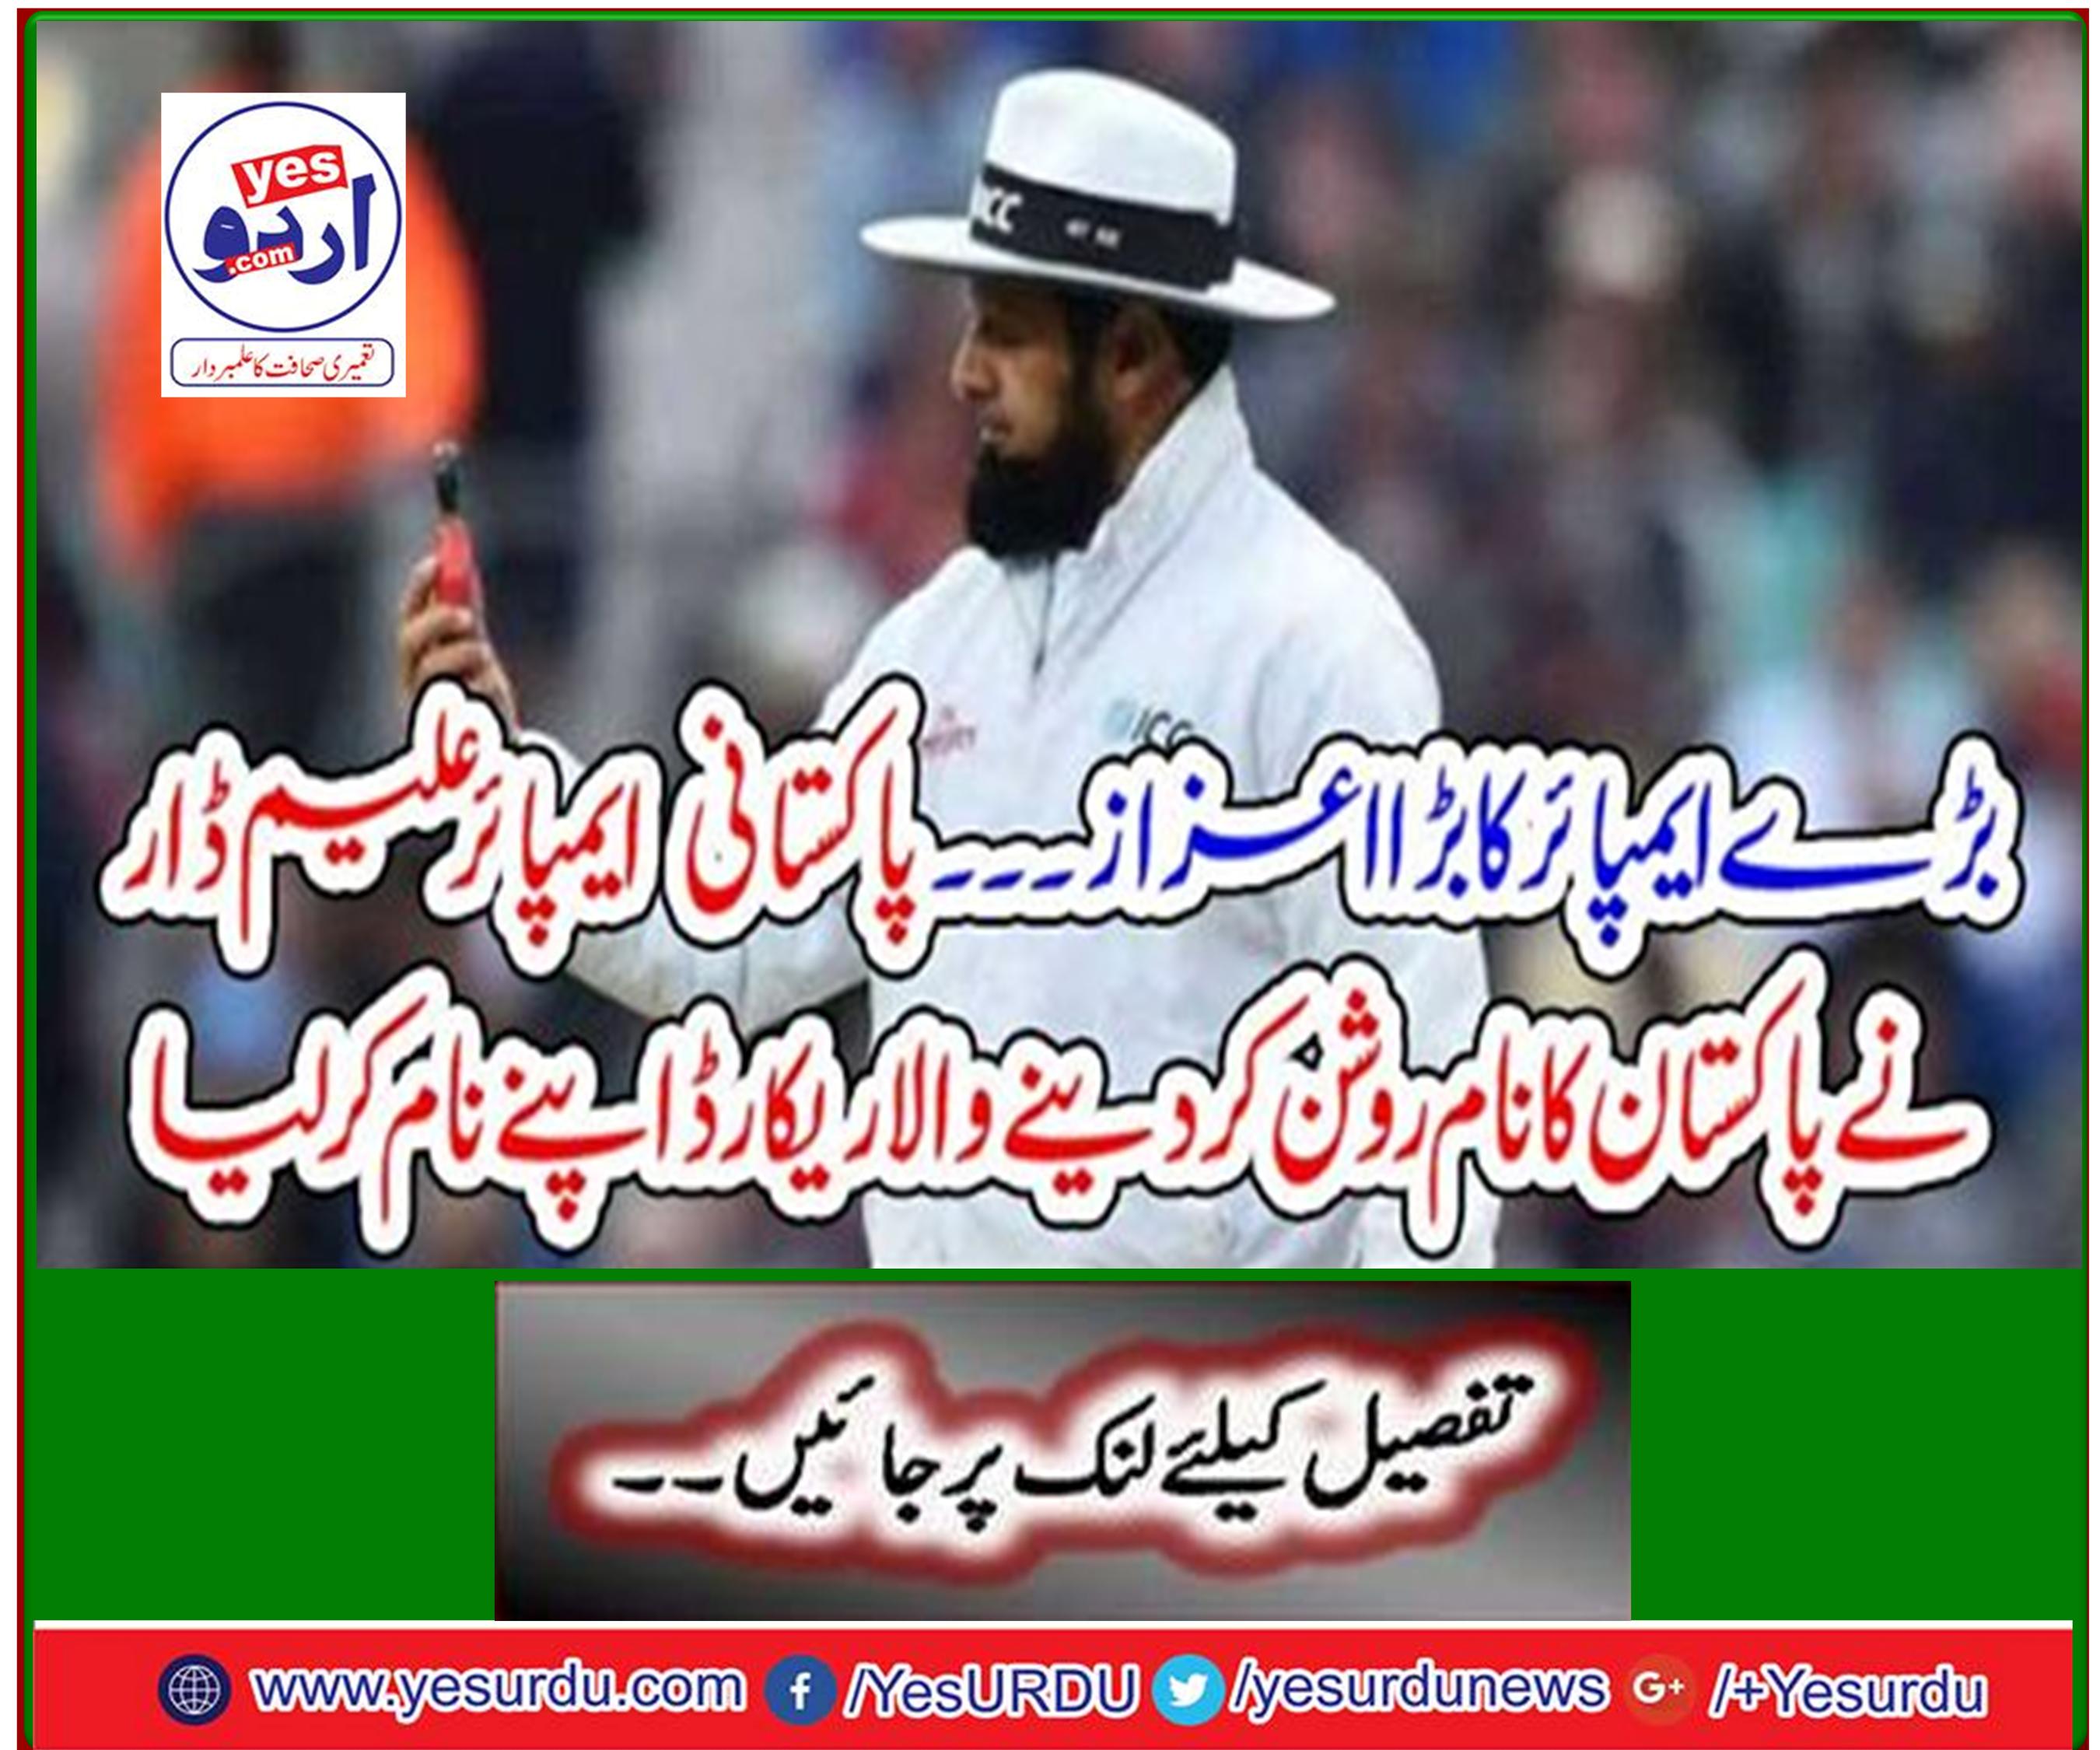 Big Emperor's Honor ... Pakistani umpire Aleem Dar has made a name for himself in Pakistan